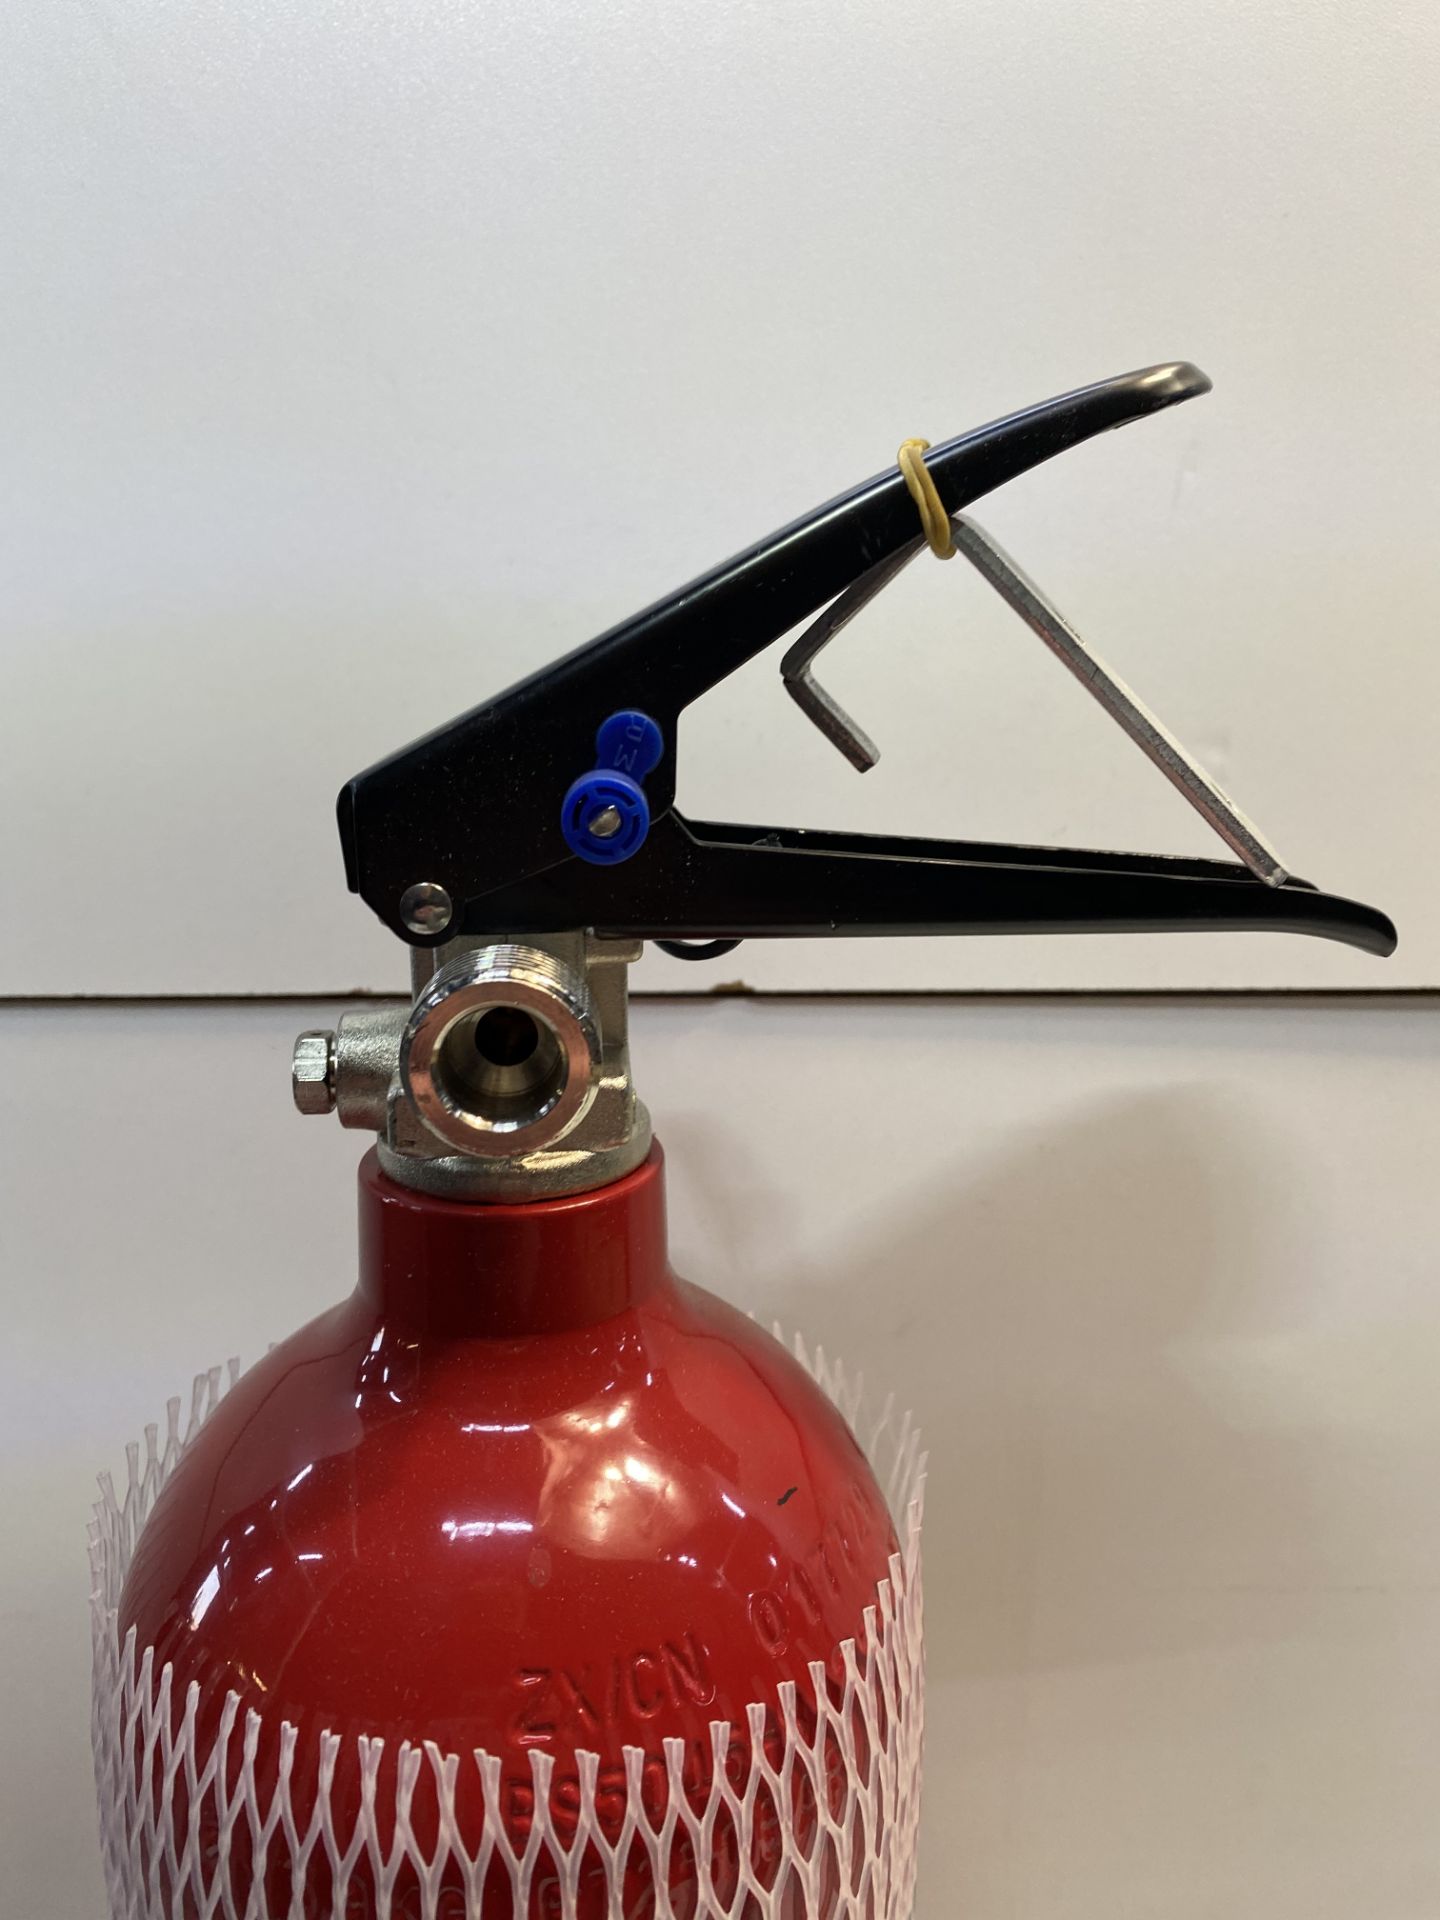 2KG C02 Fire Extinguisher Kit - Image 5 of 6